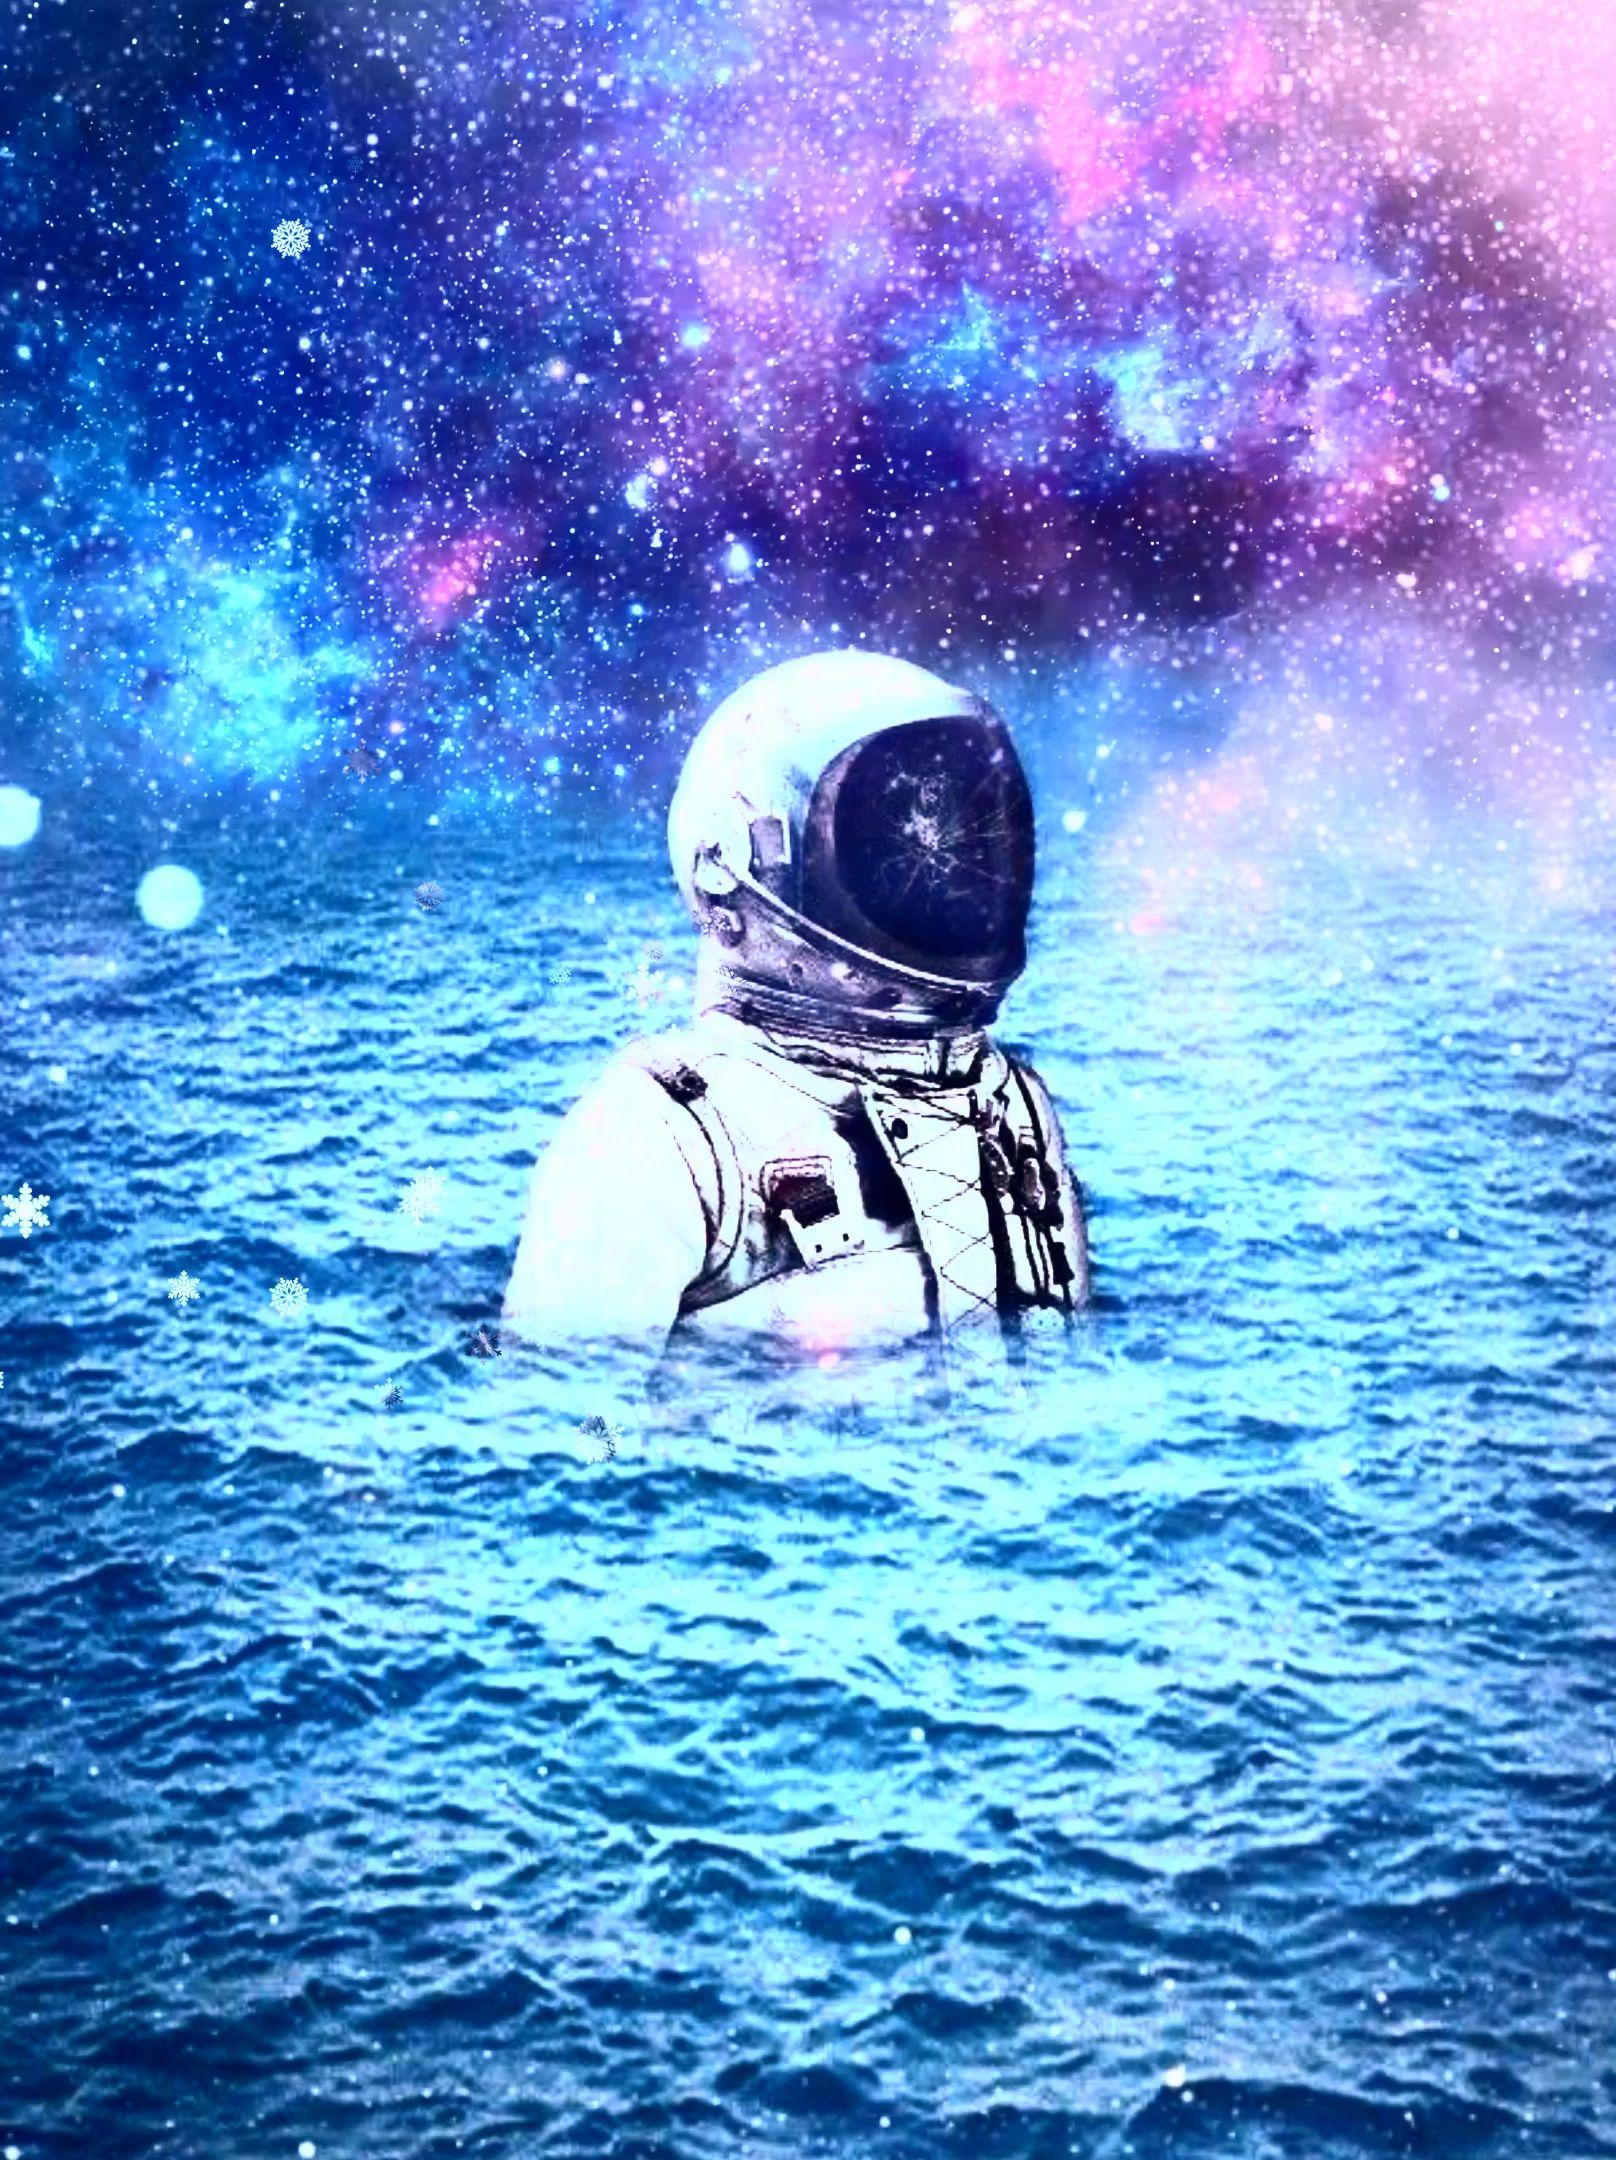 Floating In Space Wallpaper 4k Download : Wallpaper Space Astronaut